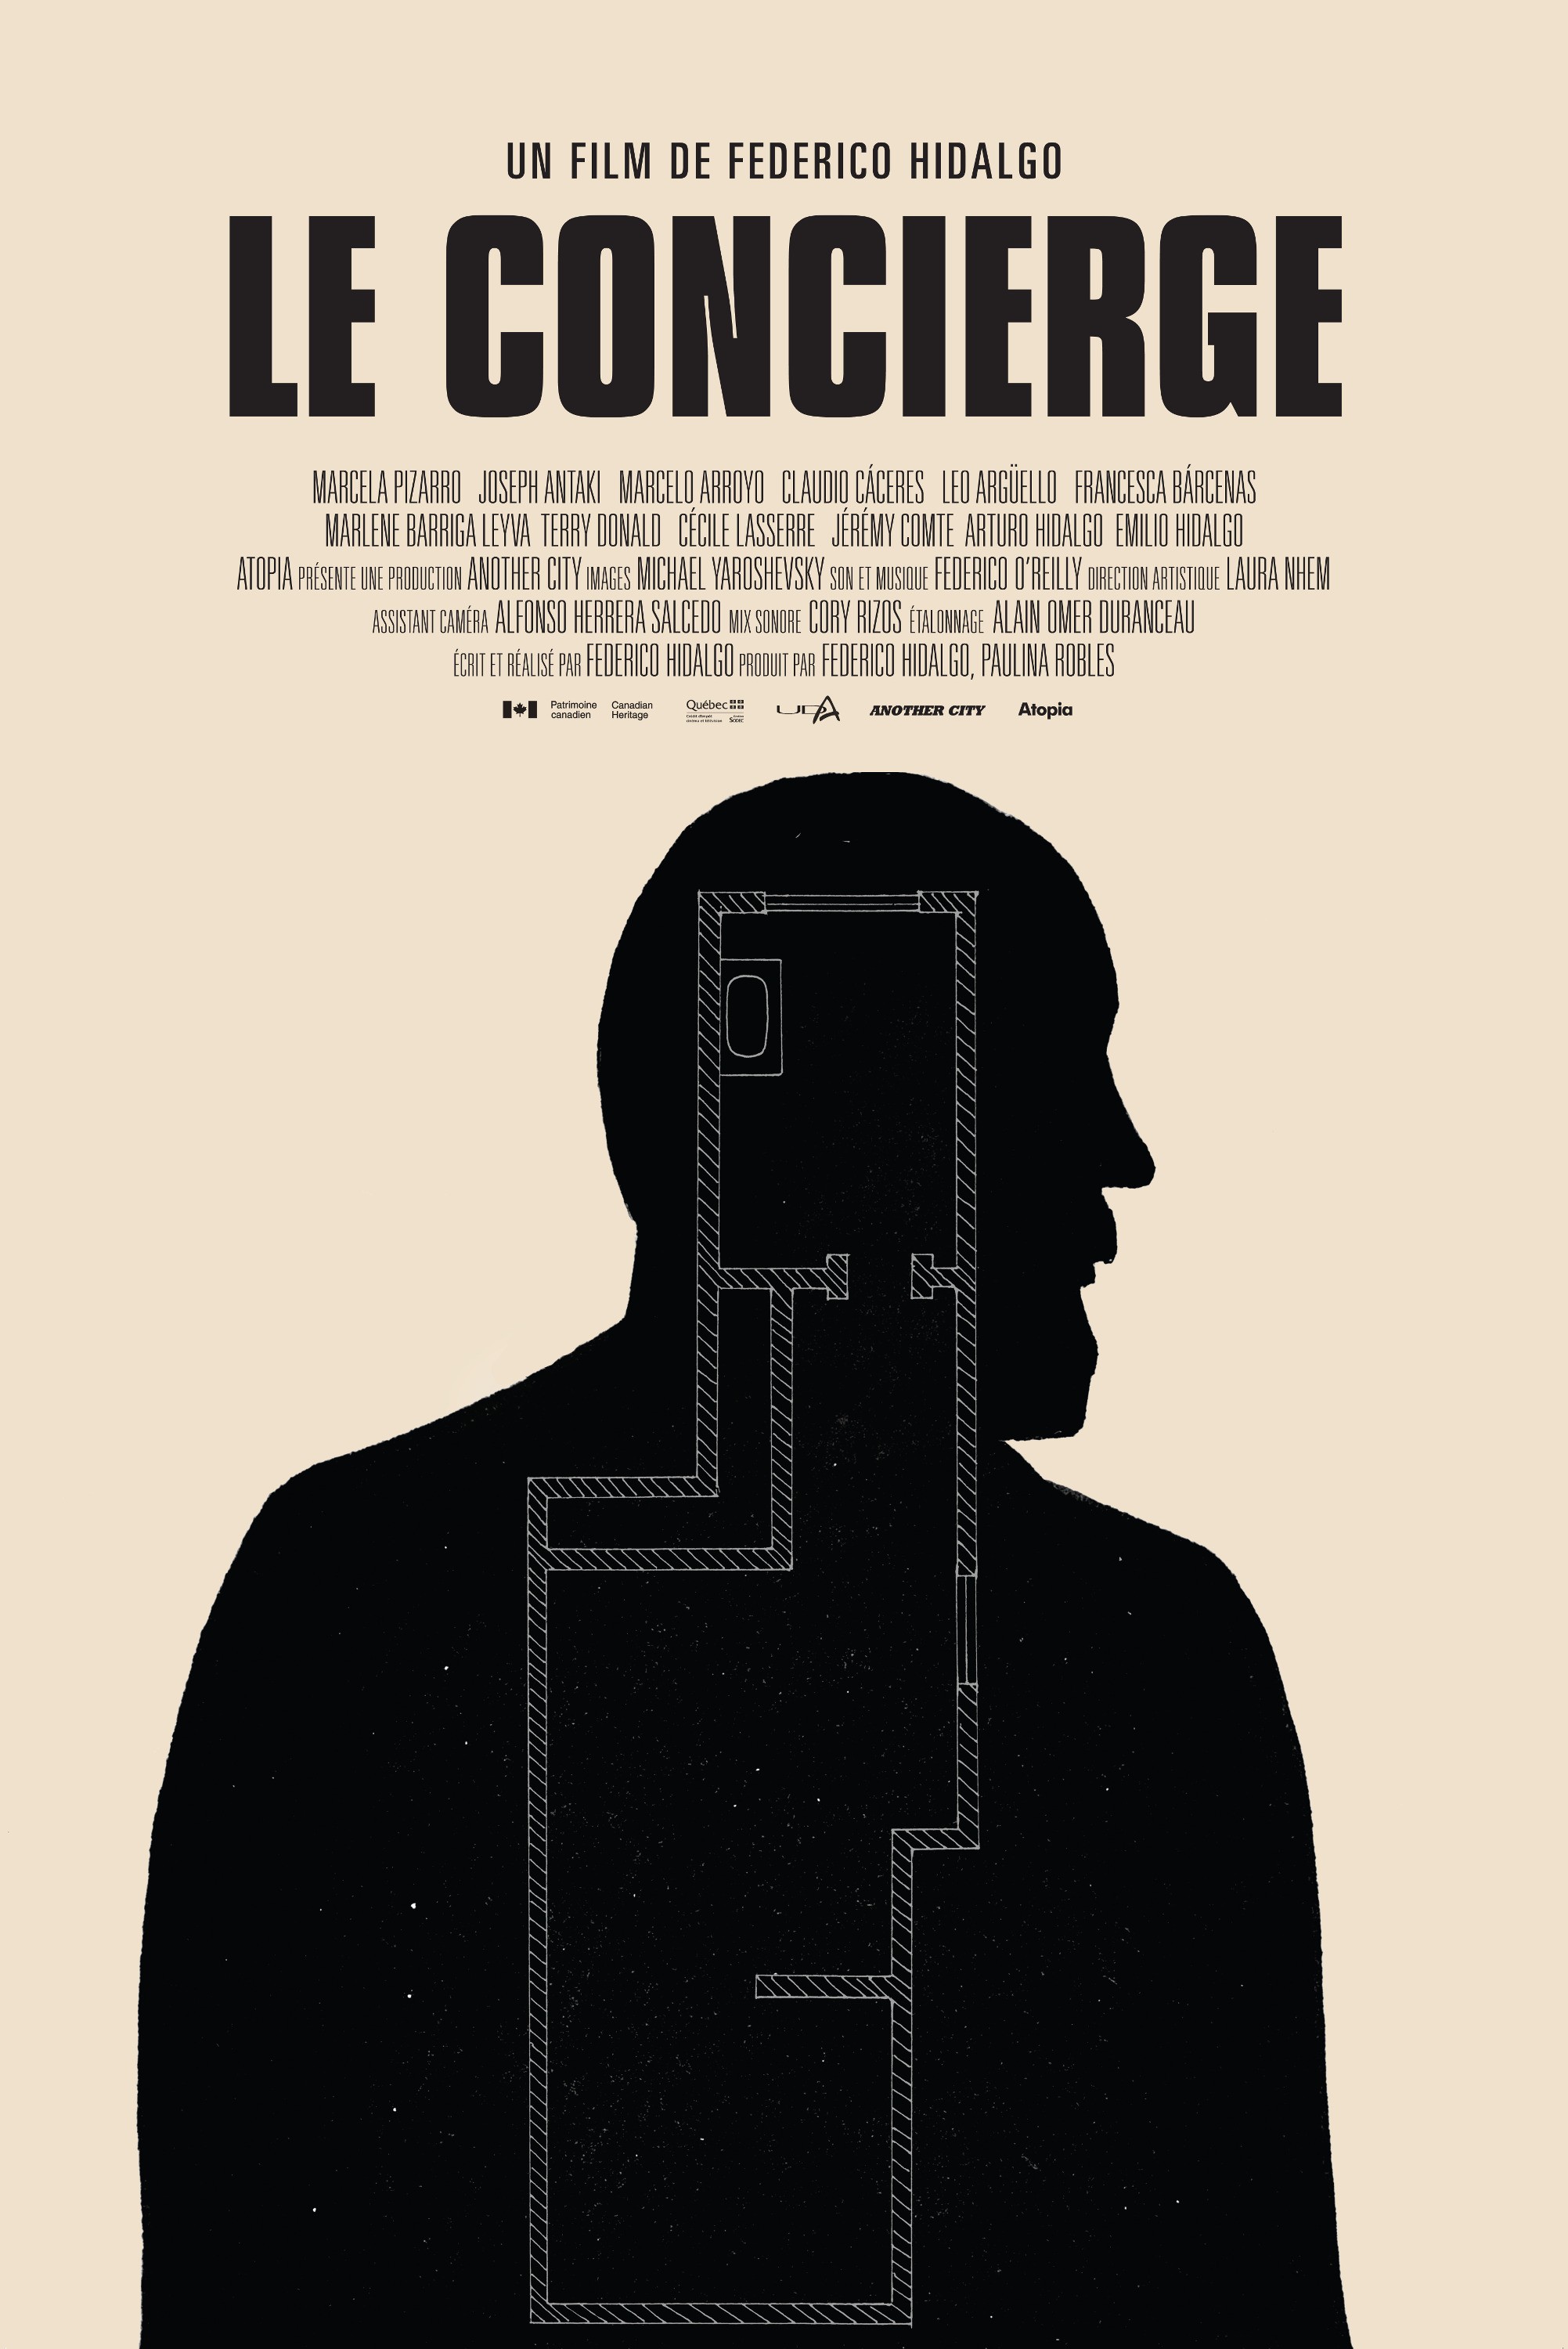 Mega Sized Movie Poster Image for Le concierge 